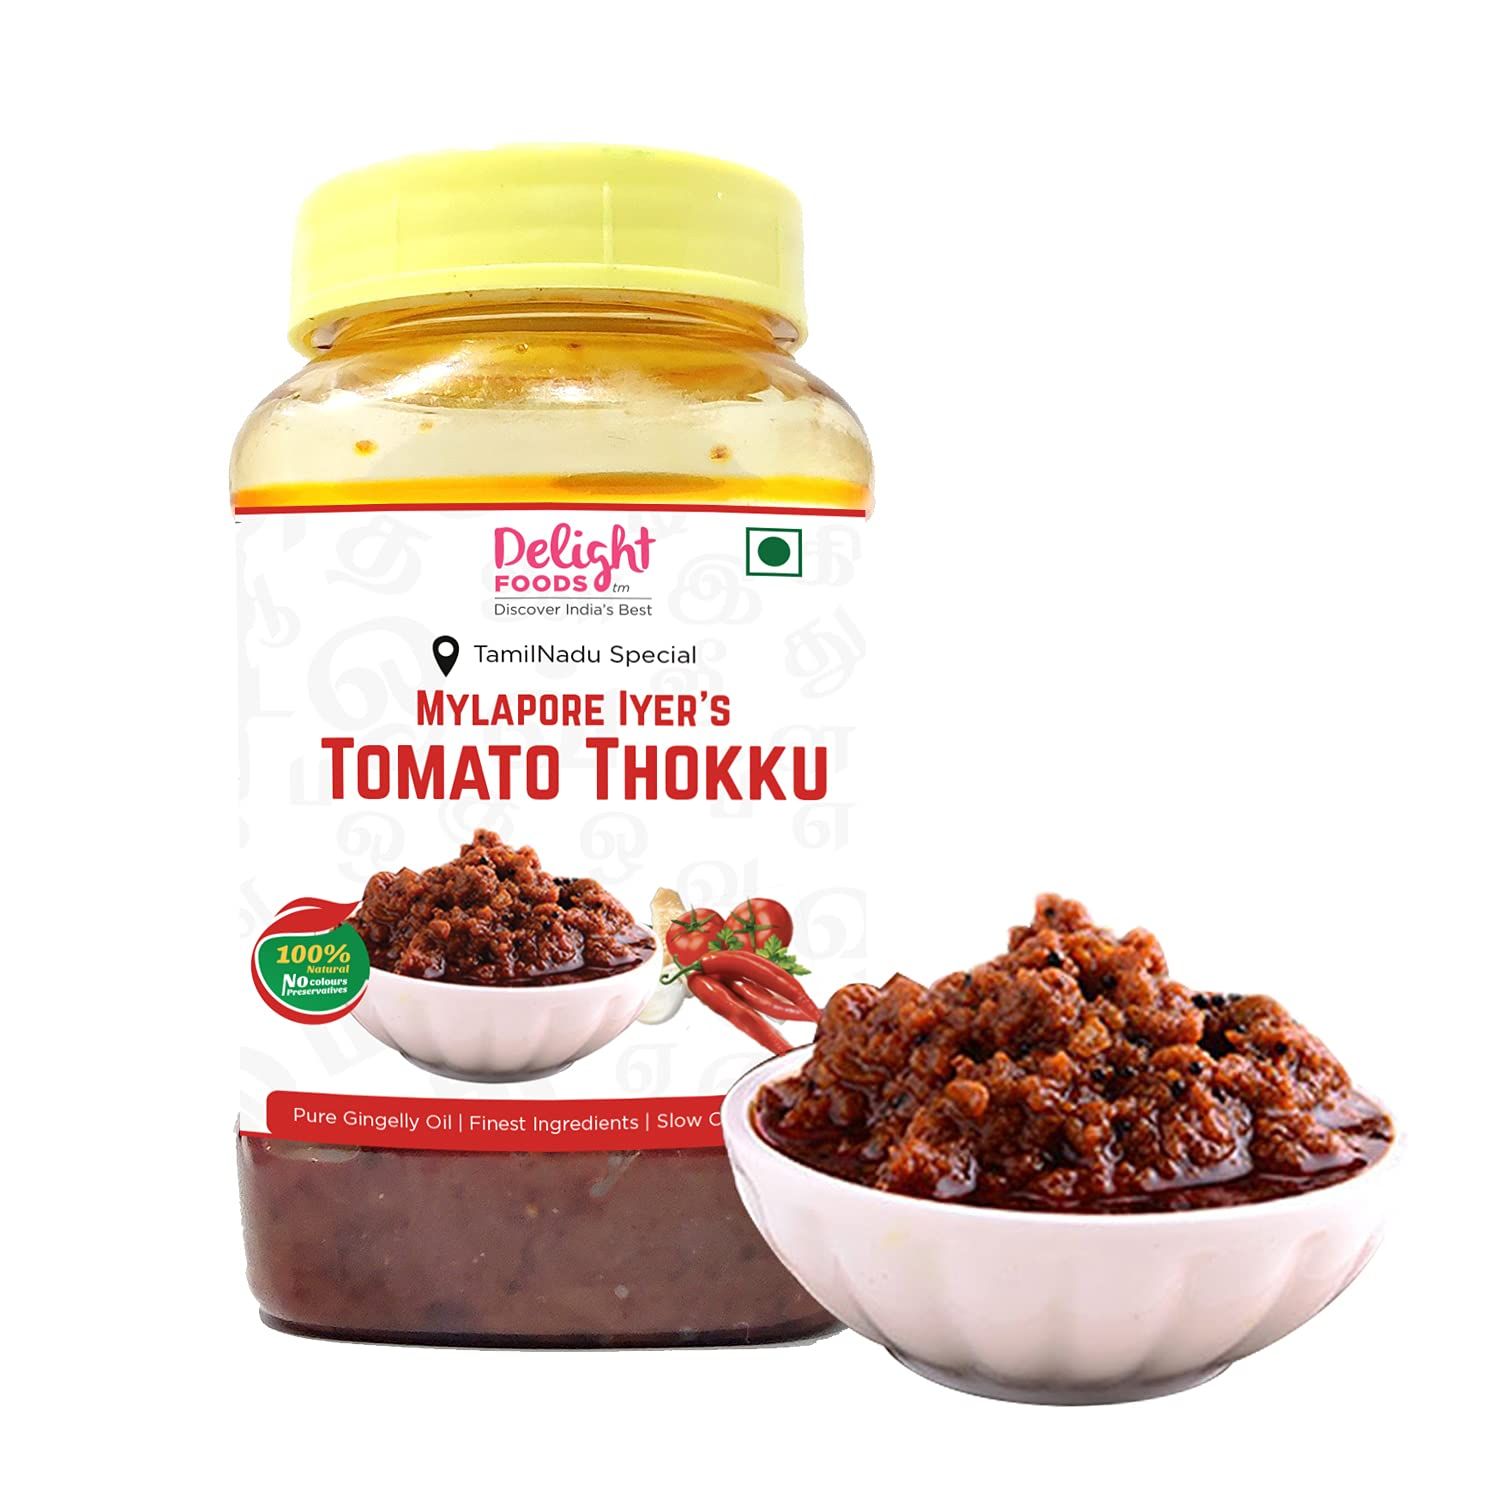 Delight Foods Tomato Thokku Image